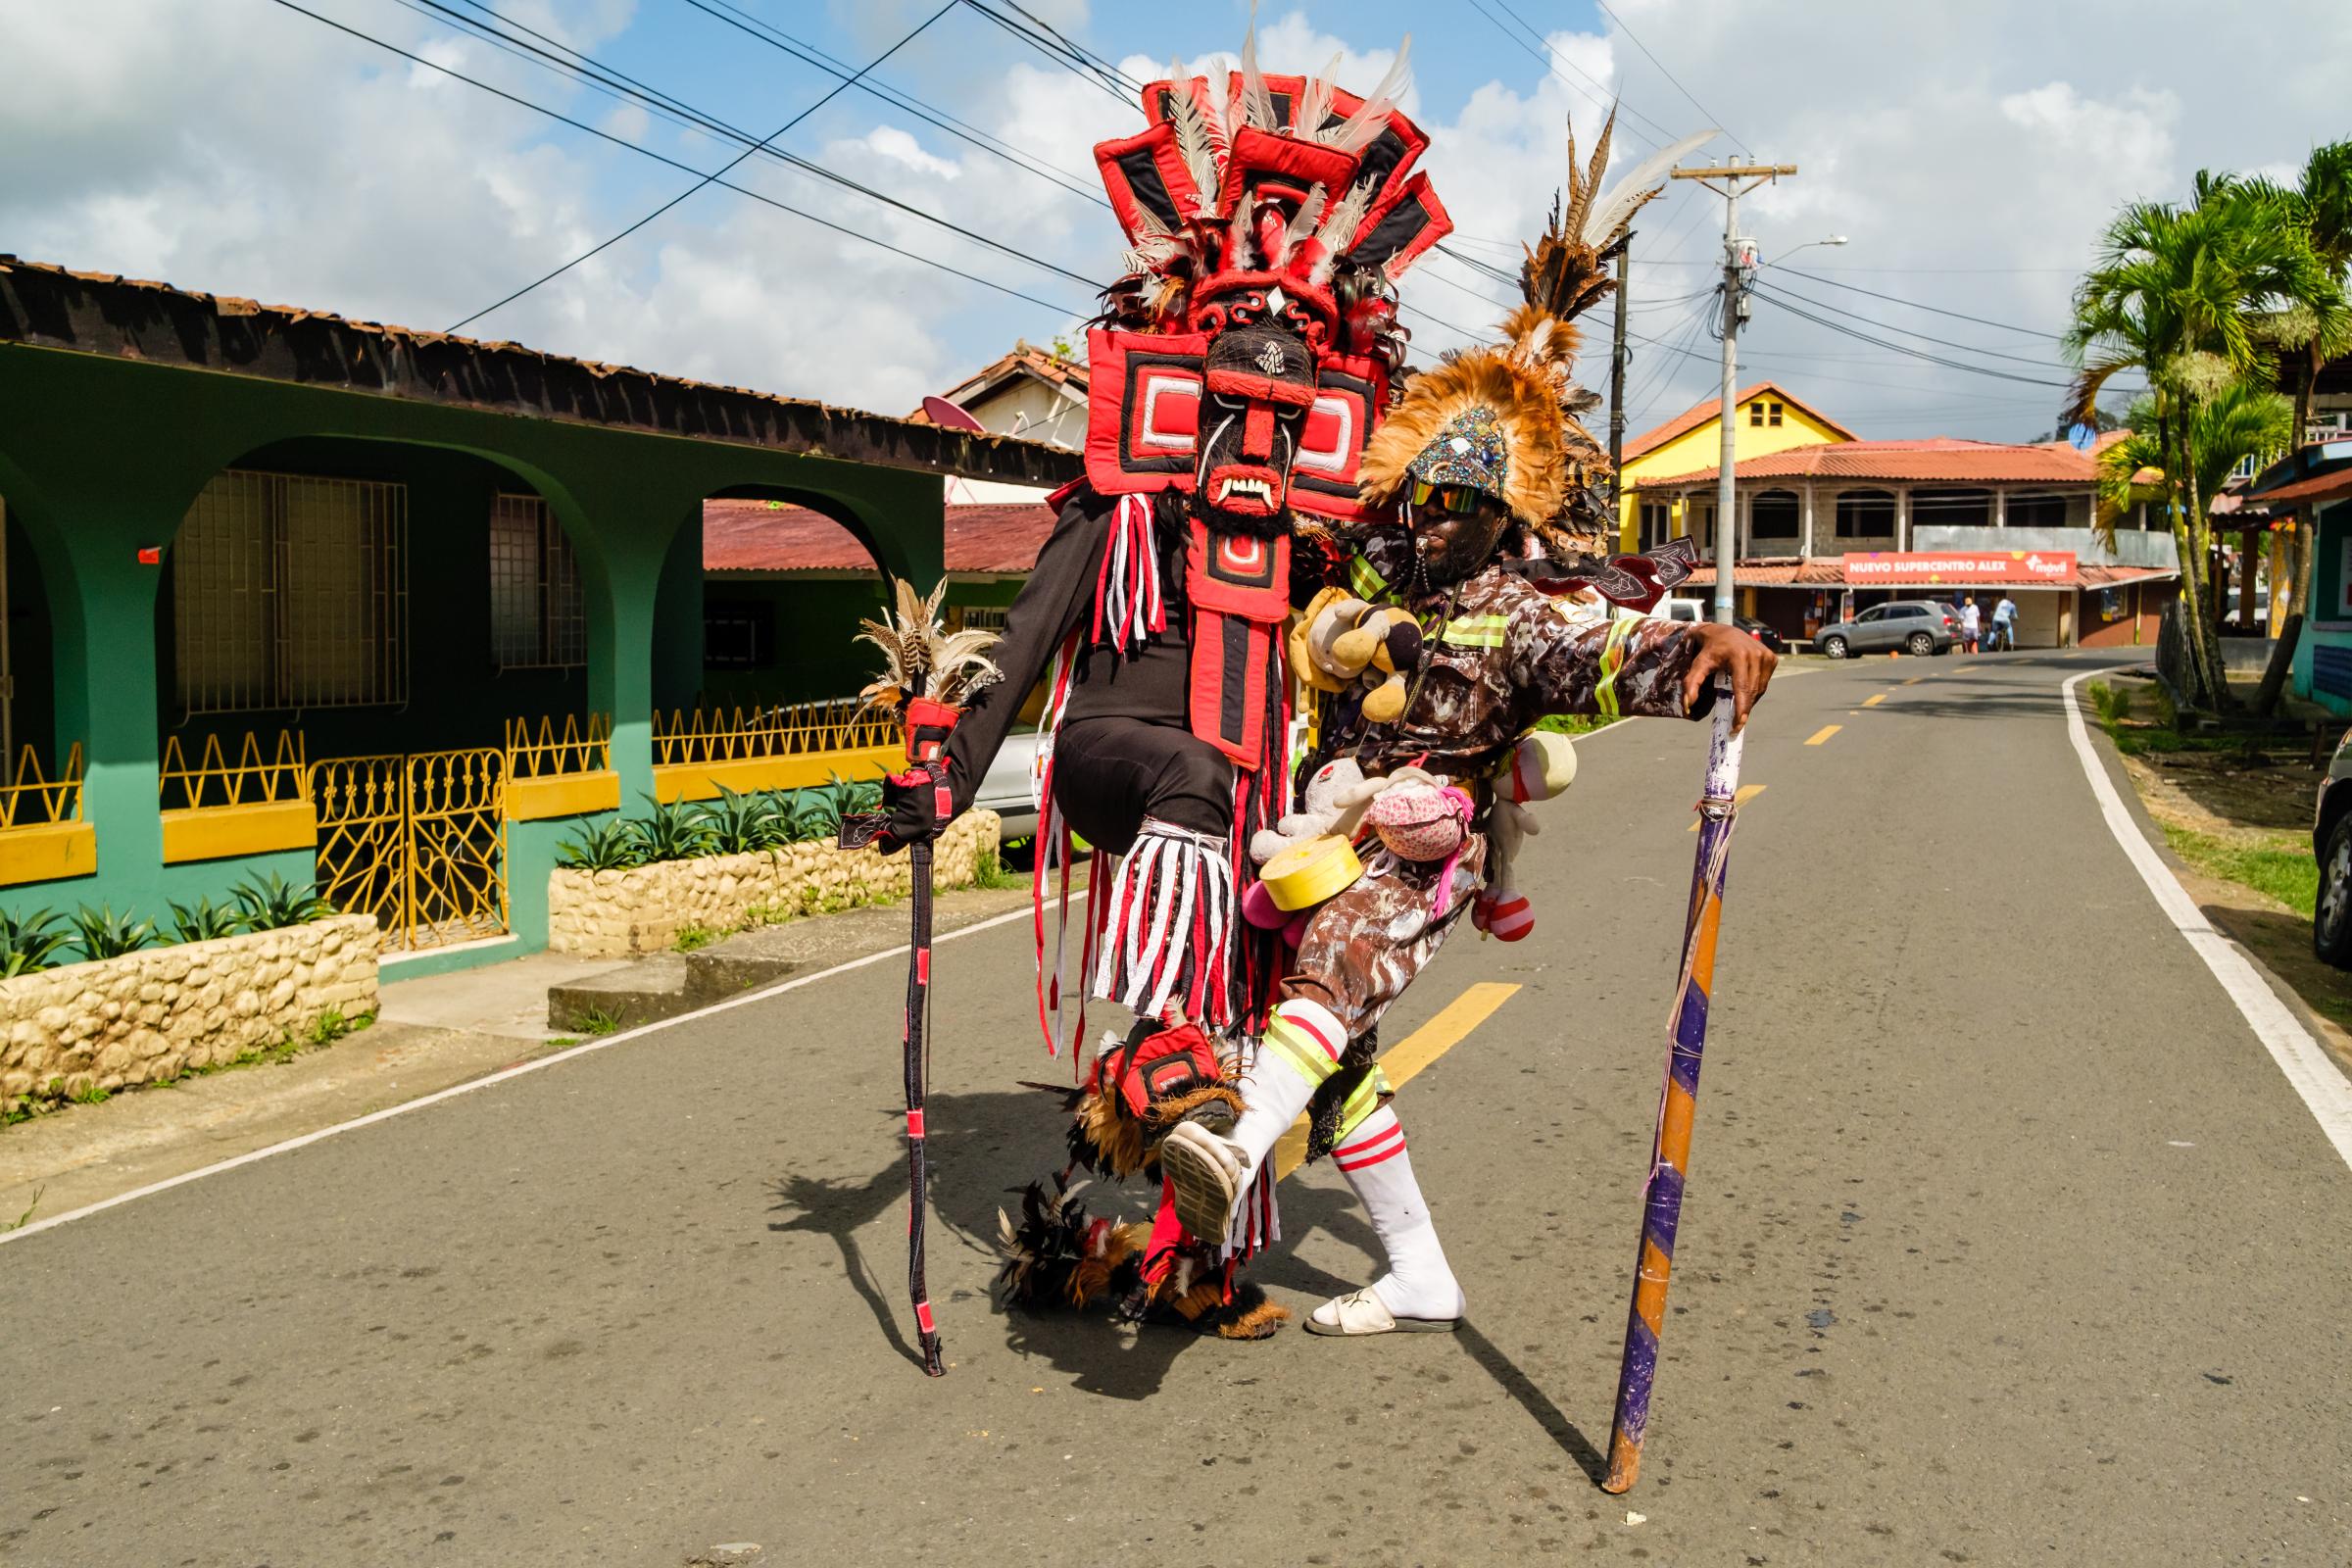 Congo Culture, Portobelo, Panama - Congo traditions in Panama celebrate the resistance...